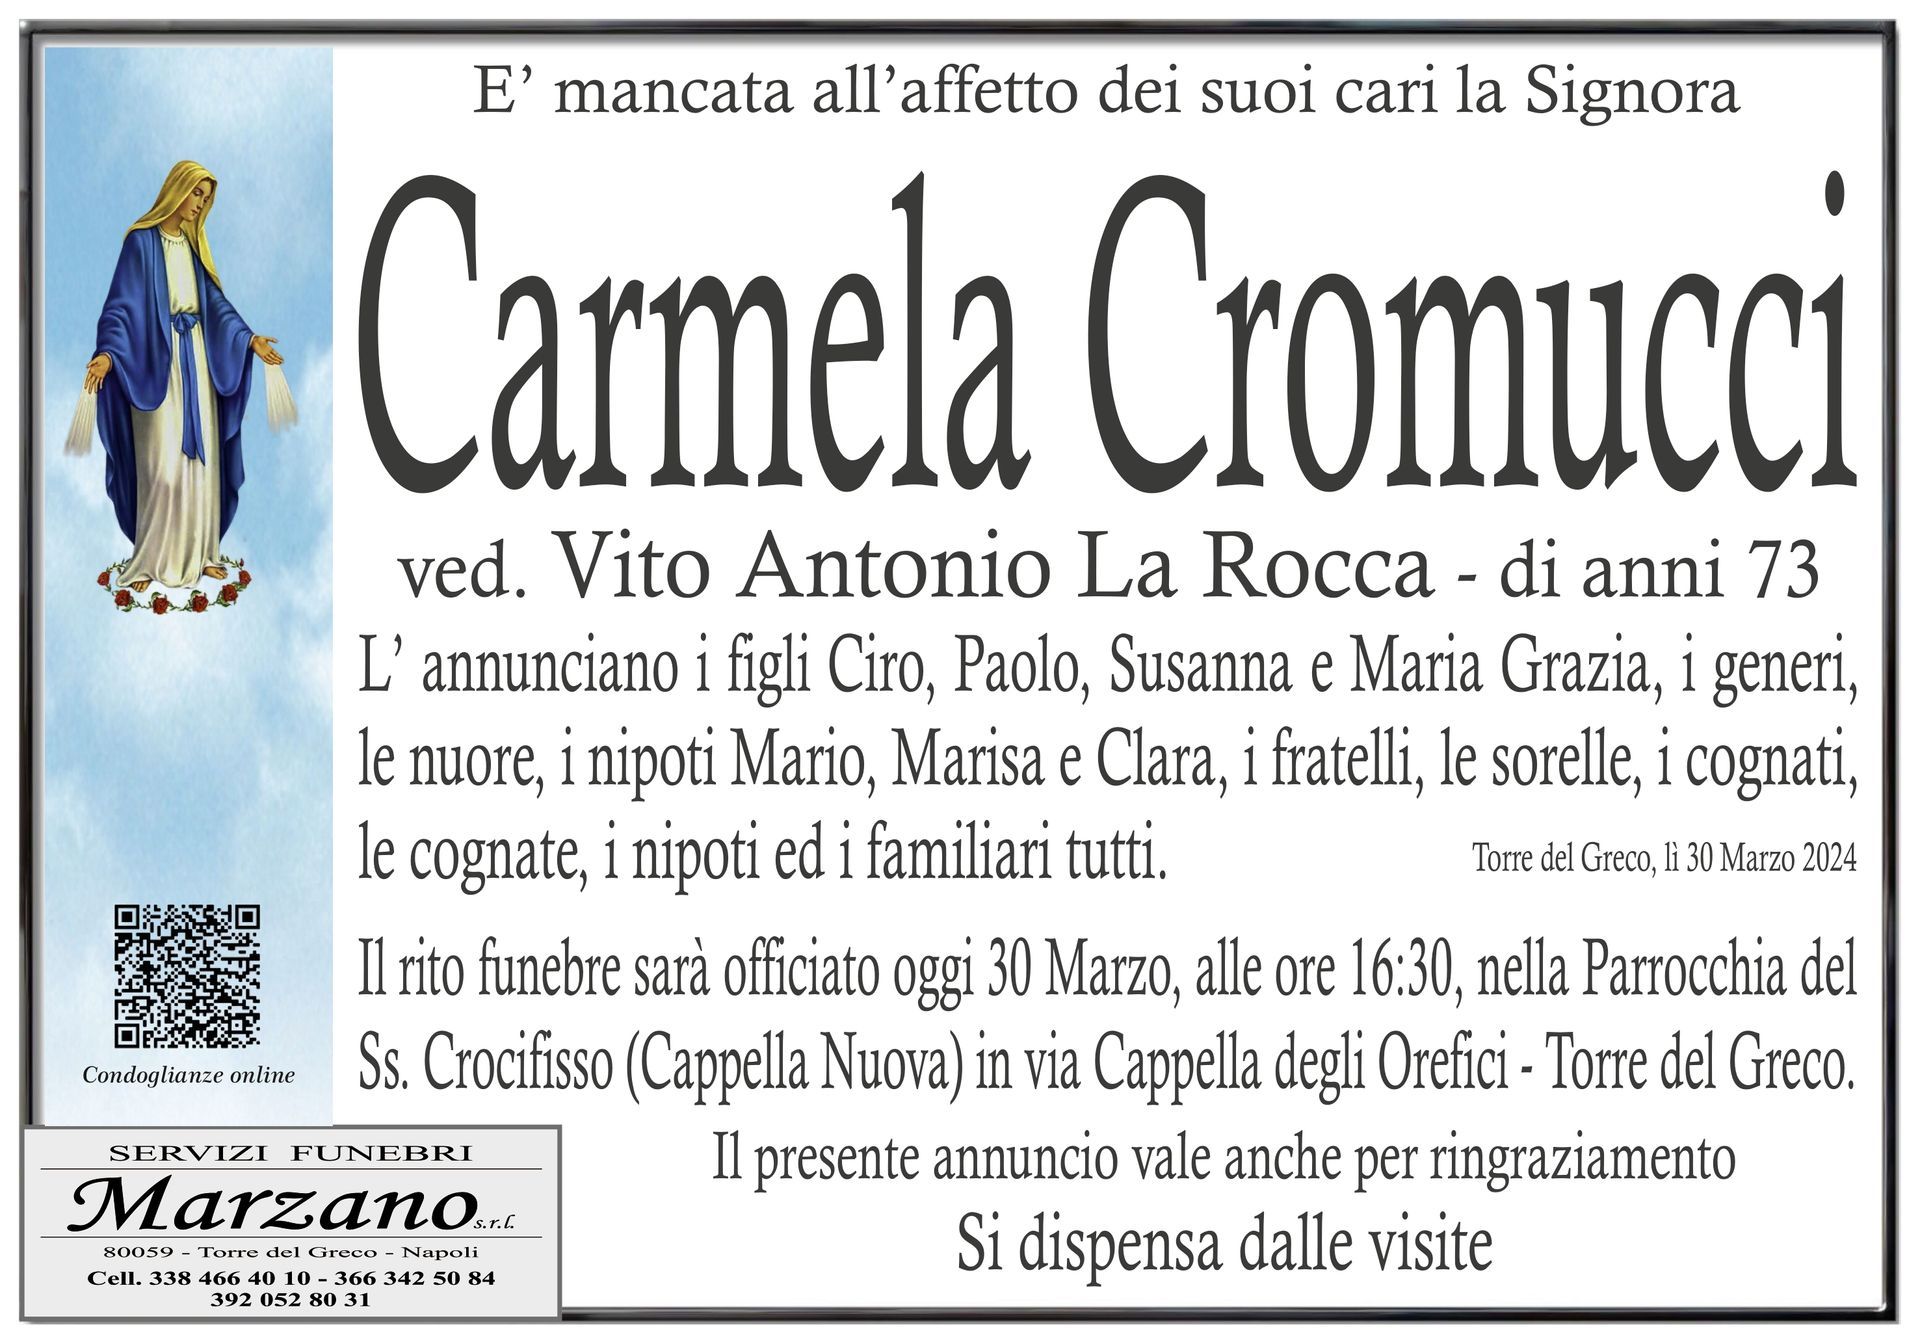 Carmela Cromucci